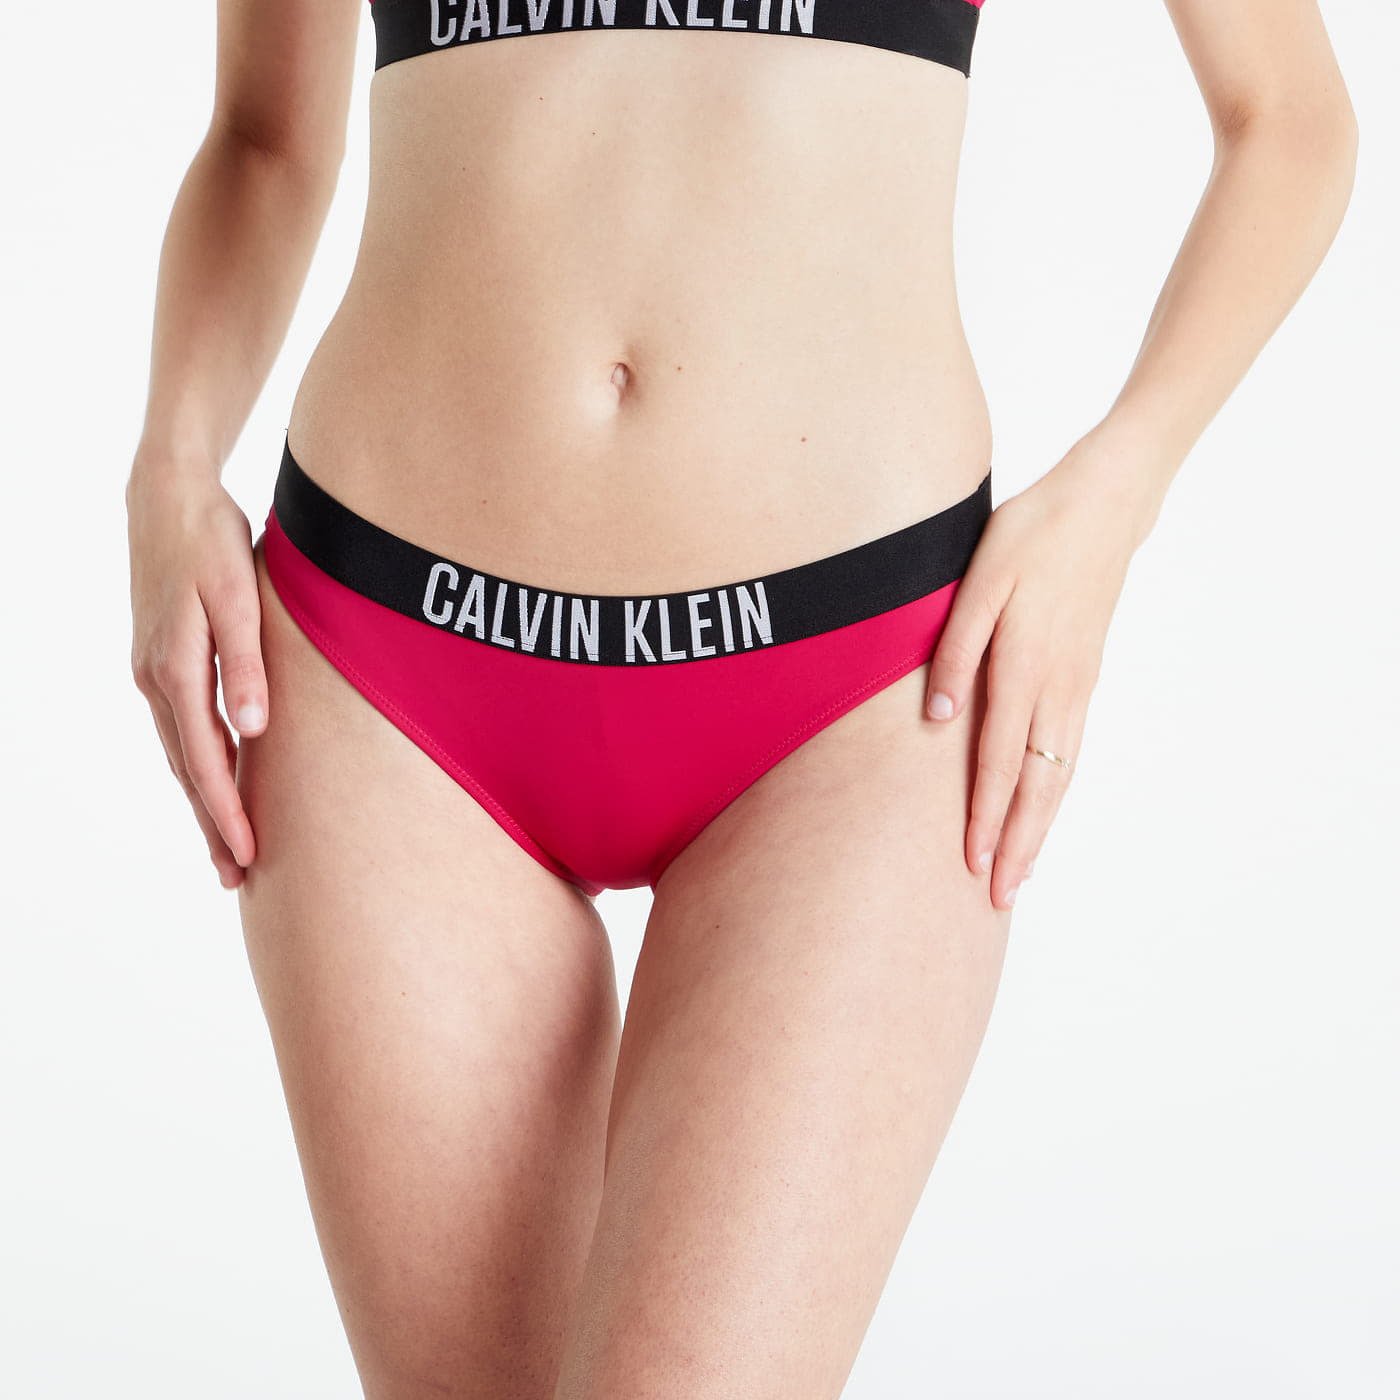 Calvin Klein Classic Bikini Bottom Intense Power Pink